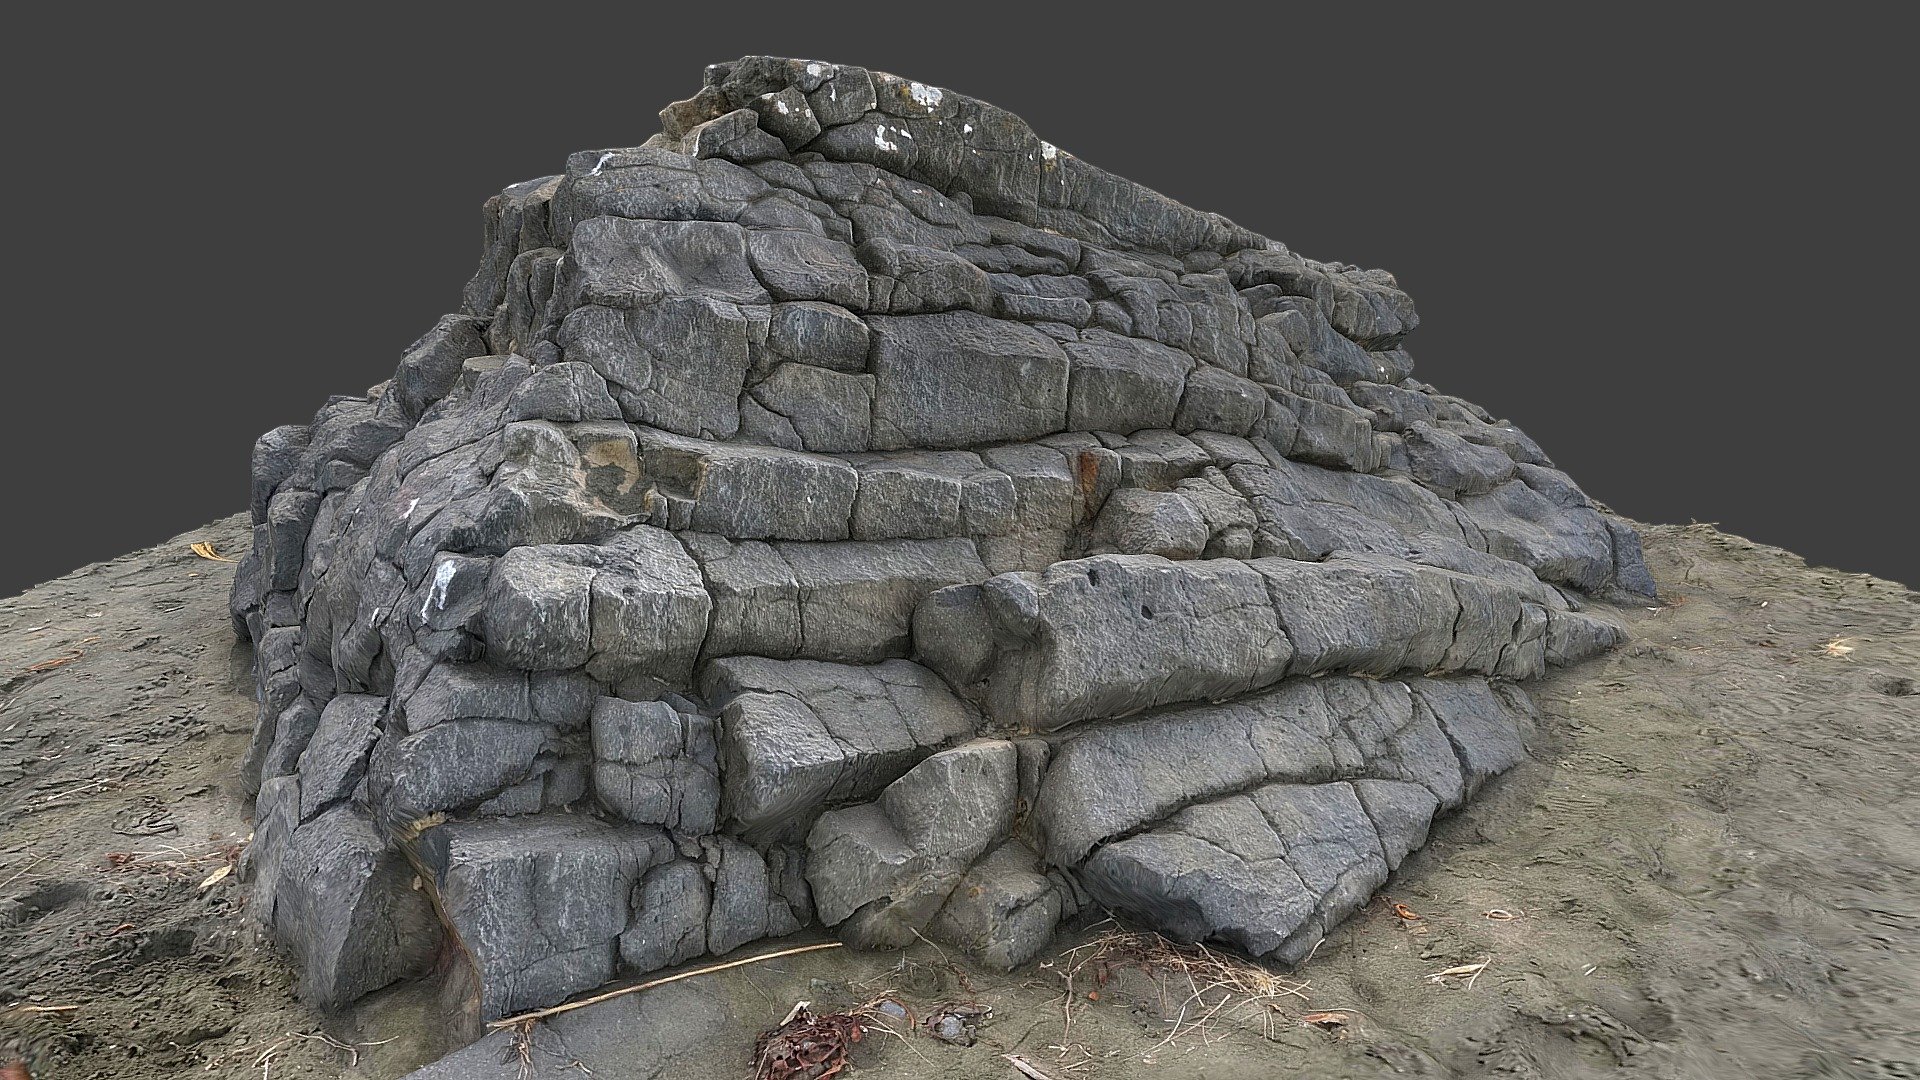 Columnar basalt boulder on beach, Maori Bay, Muriwai, New Zealand.
My 3D reconstruction generated with photogrammetry software 3DF Zephyr v6.010 processing 83 images - Basalt rock on beach - Download Free 3D model by b_nealie 3d model